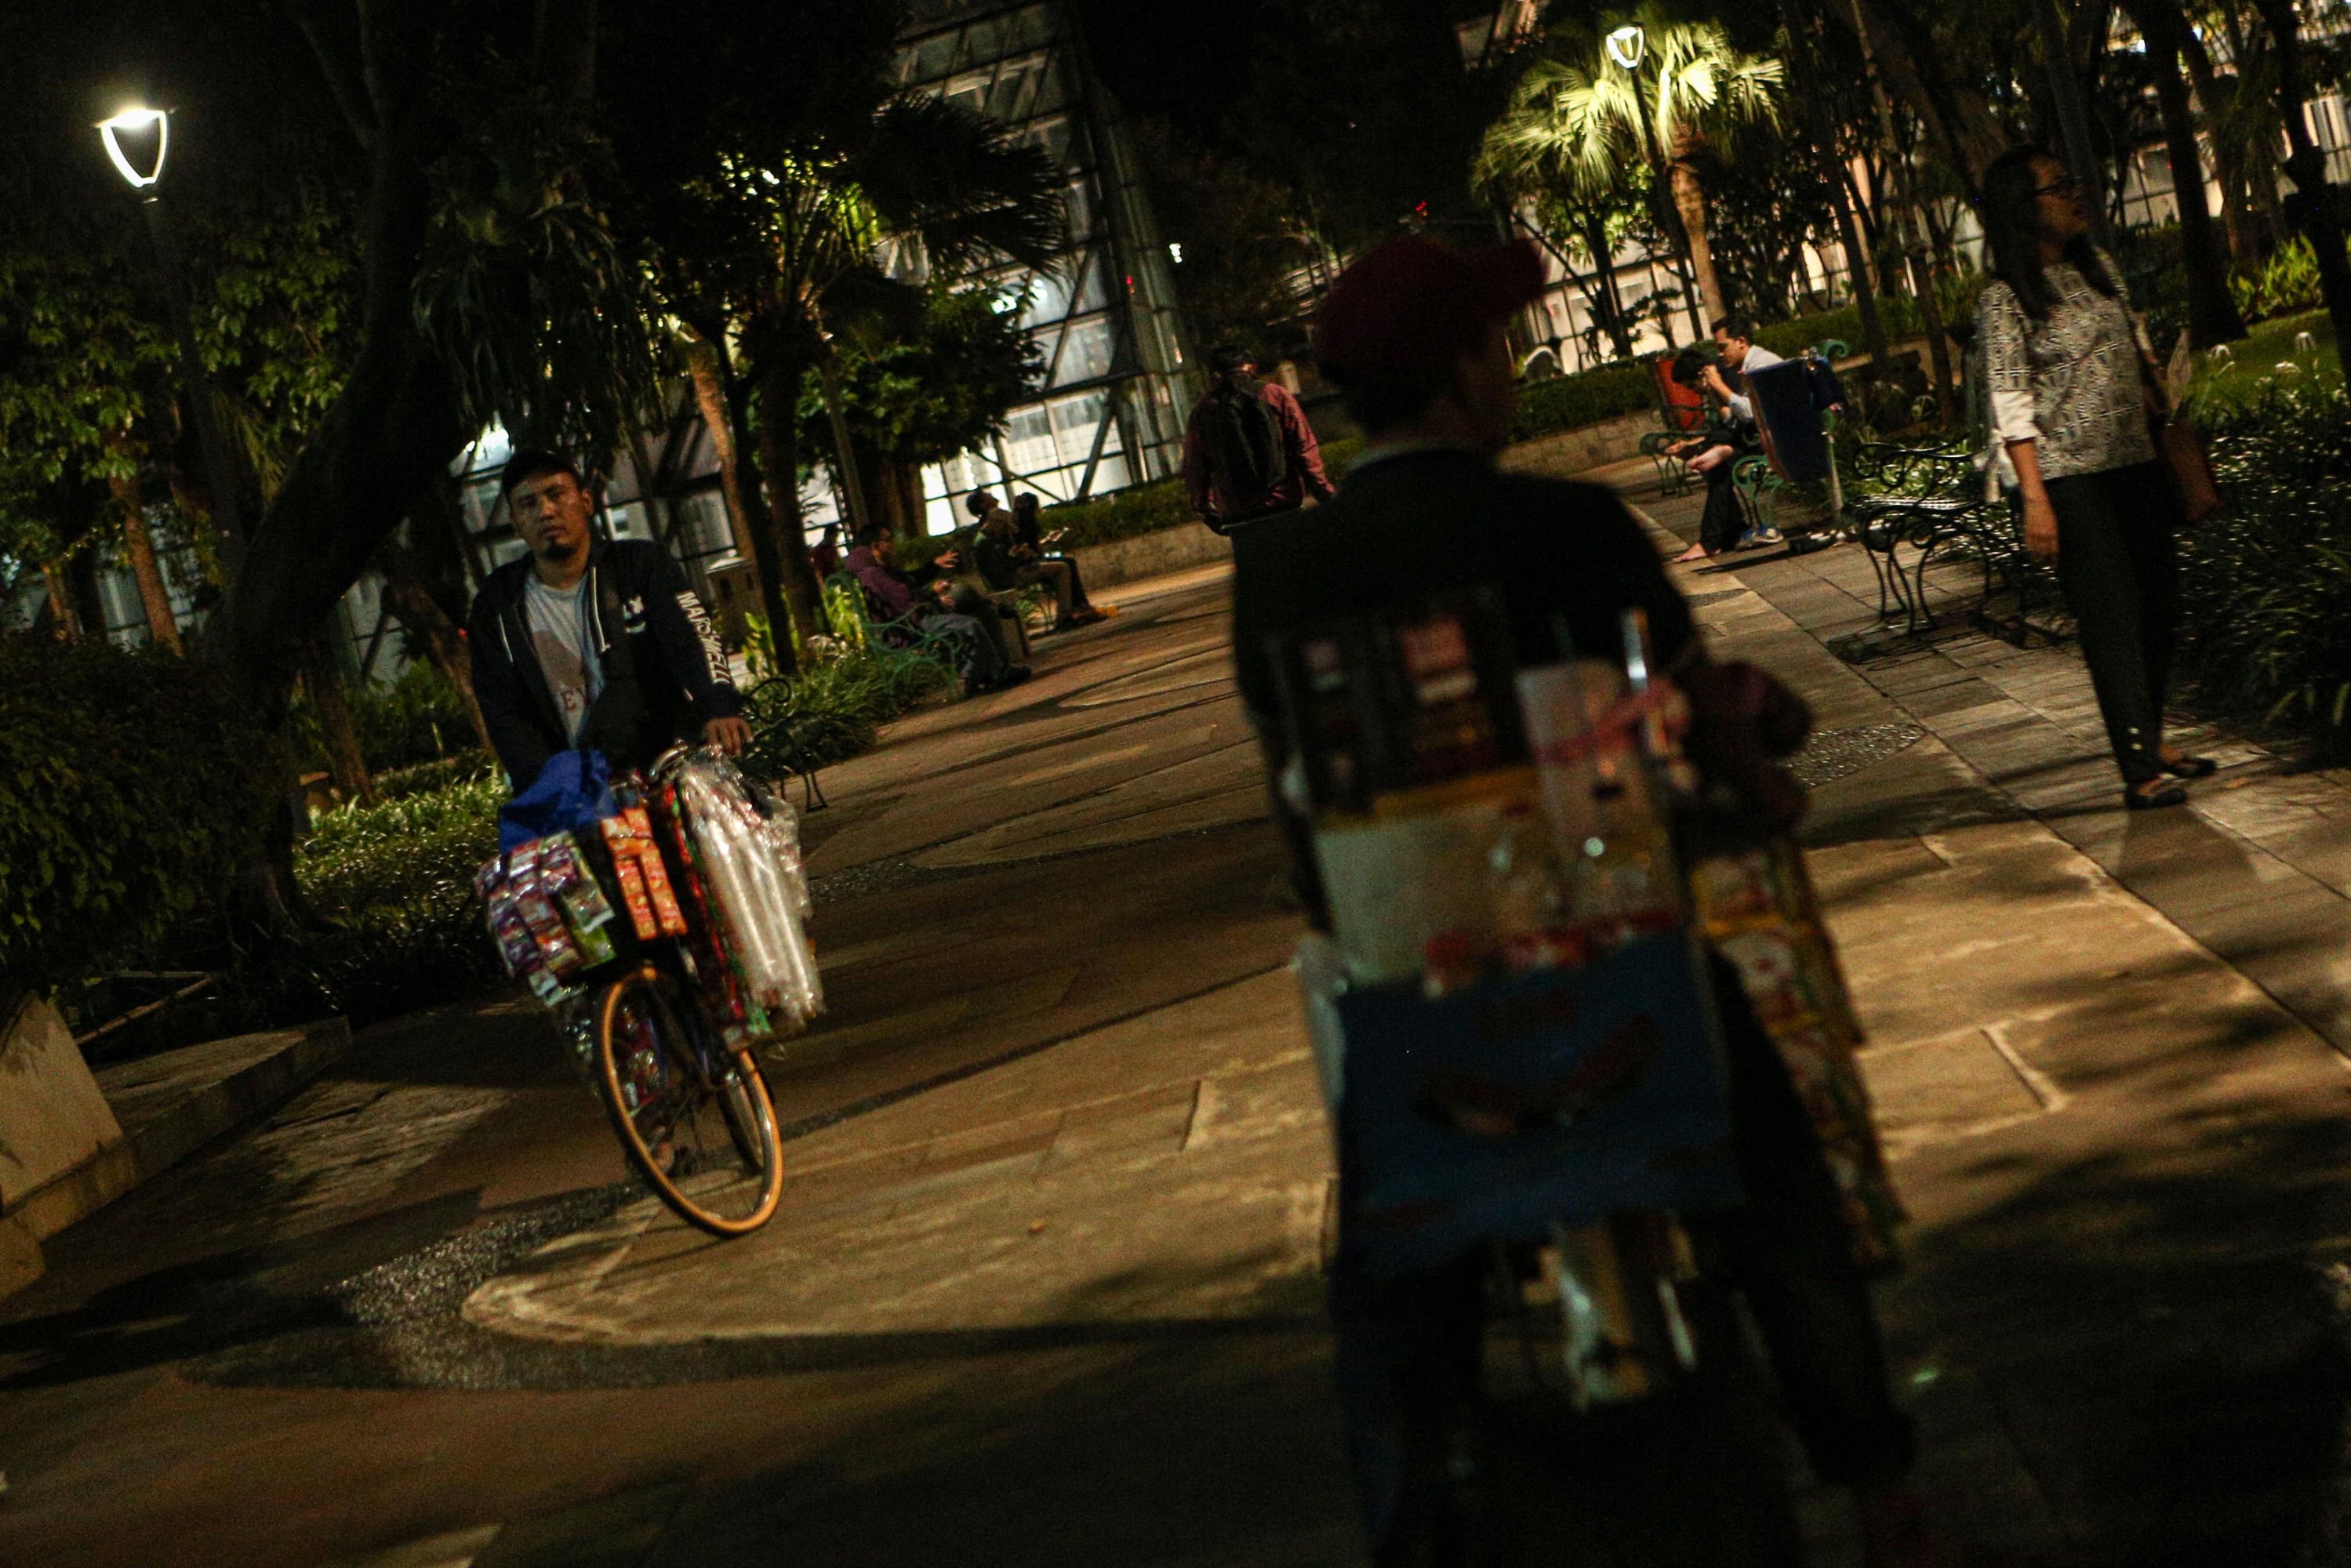 Pedagang kopi keliling berjualan di Kawasan Taman Menteng, Jakarta Pusat.